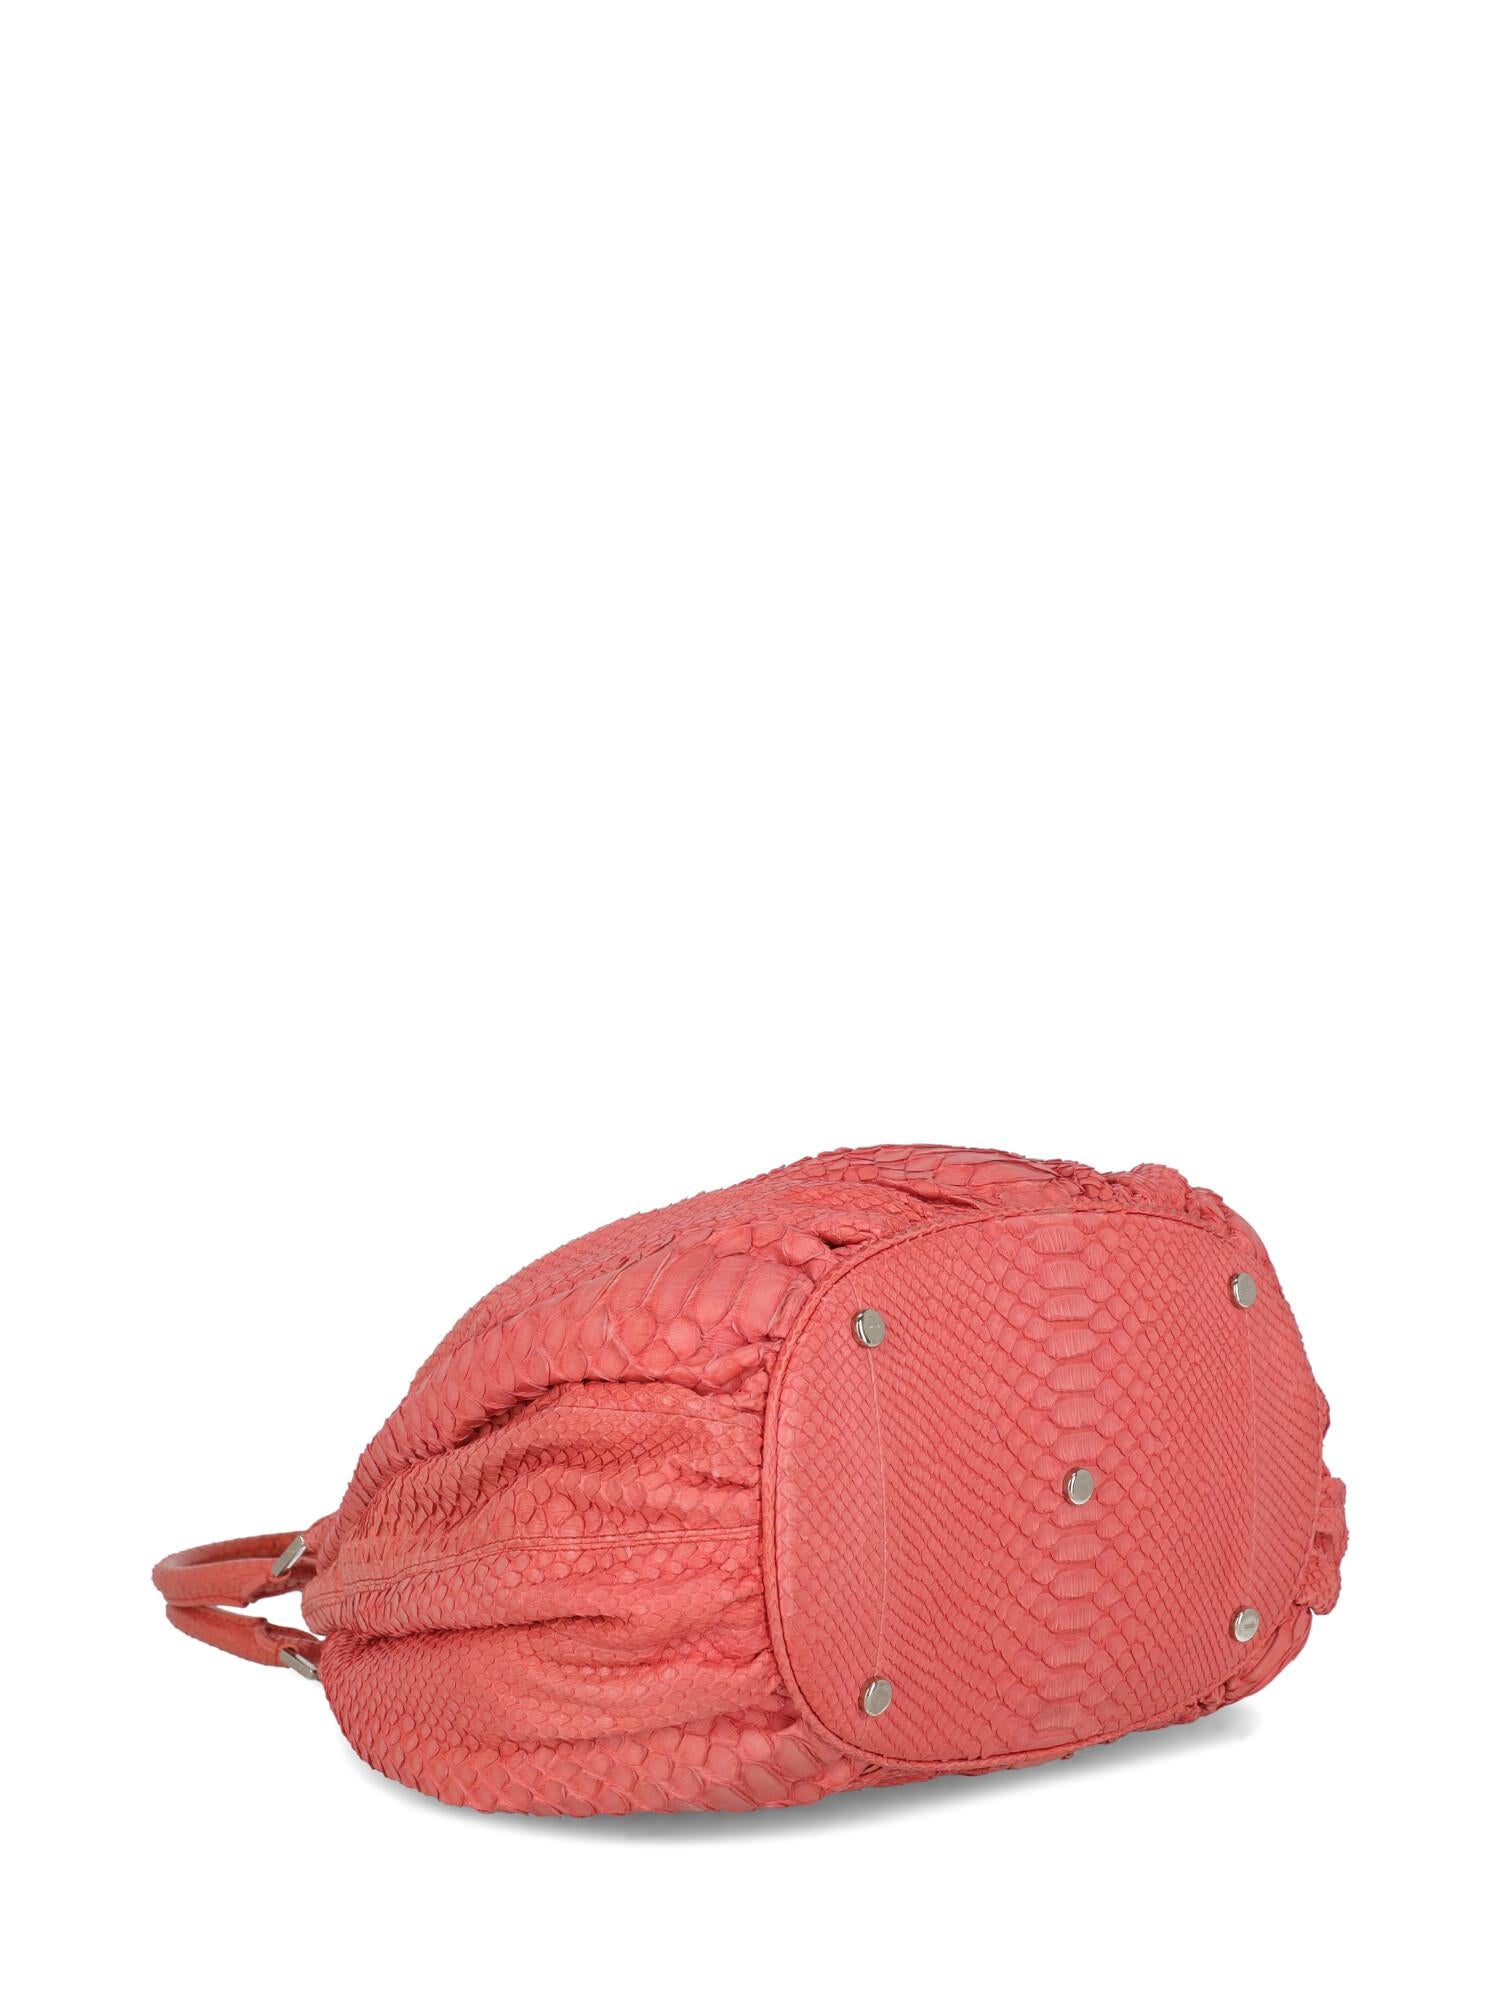 Women's Emilio Pucci Woman Shoulder bag  Pink Leather